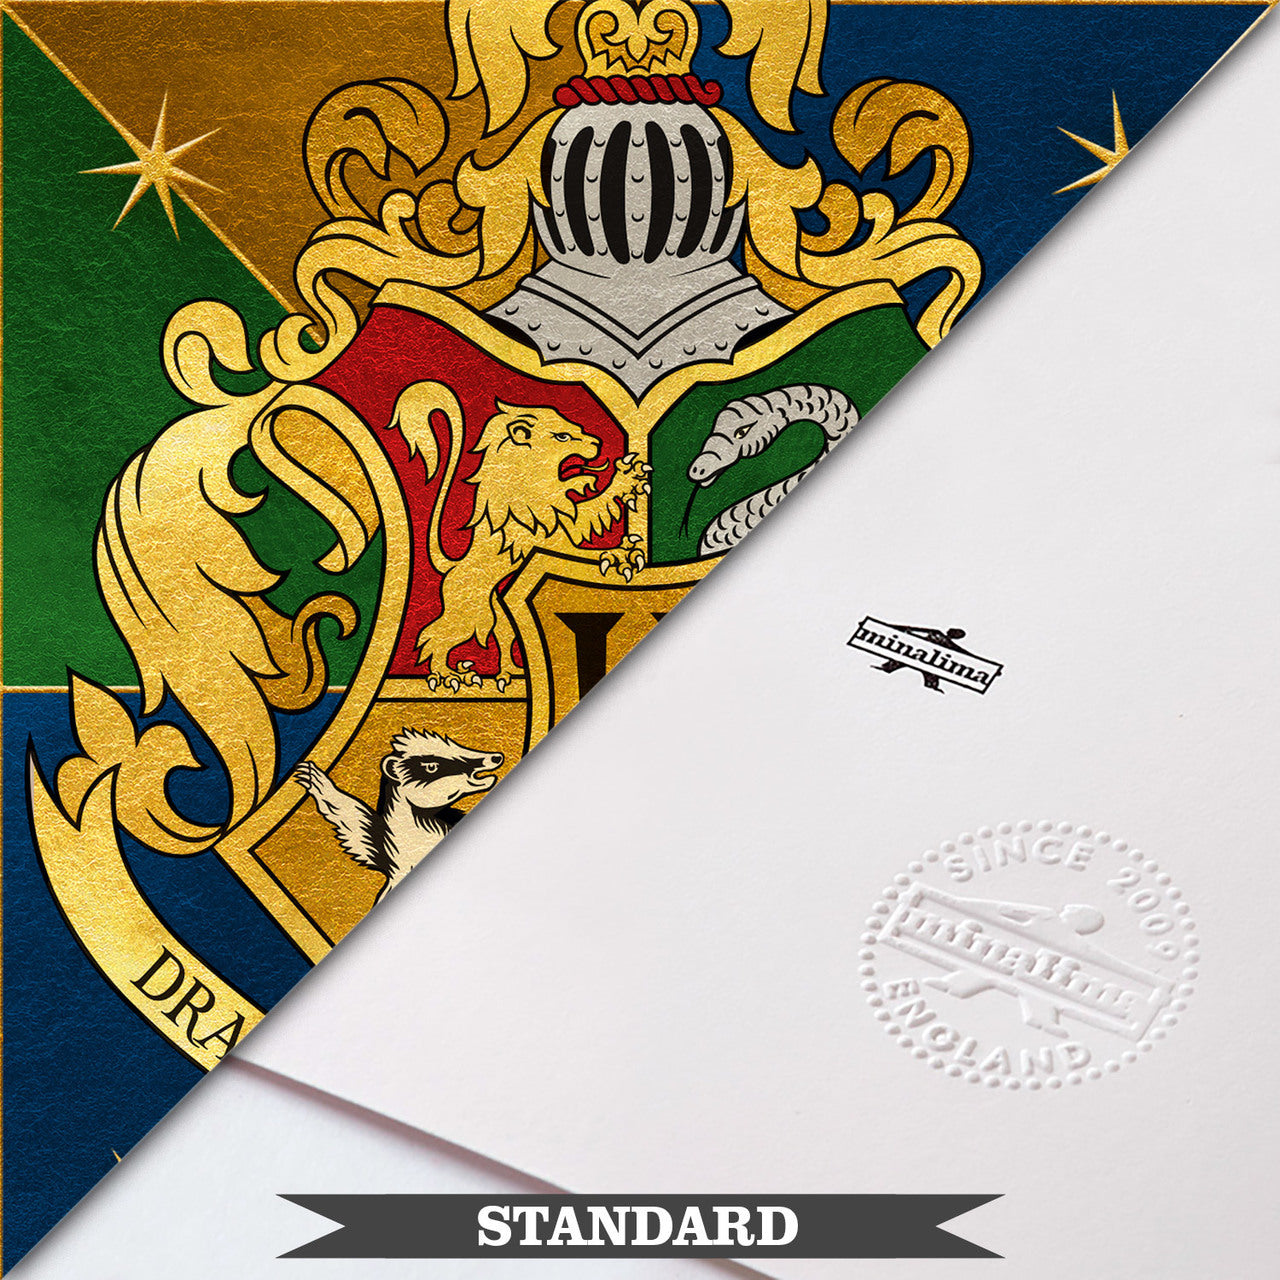 Hogwarts Crest Limited Edition Art Print